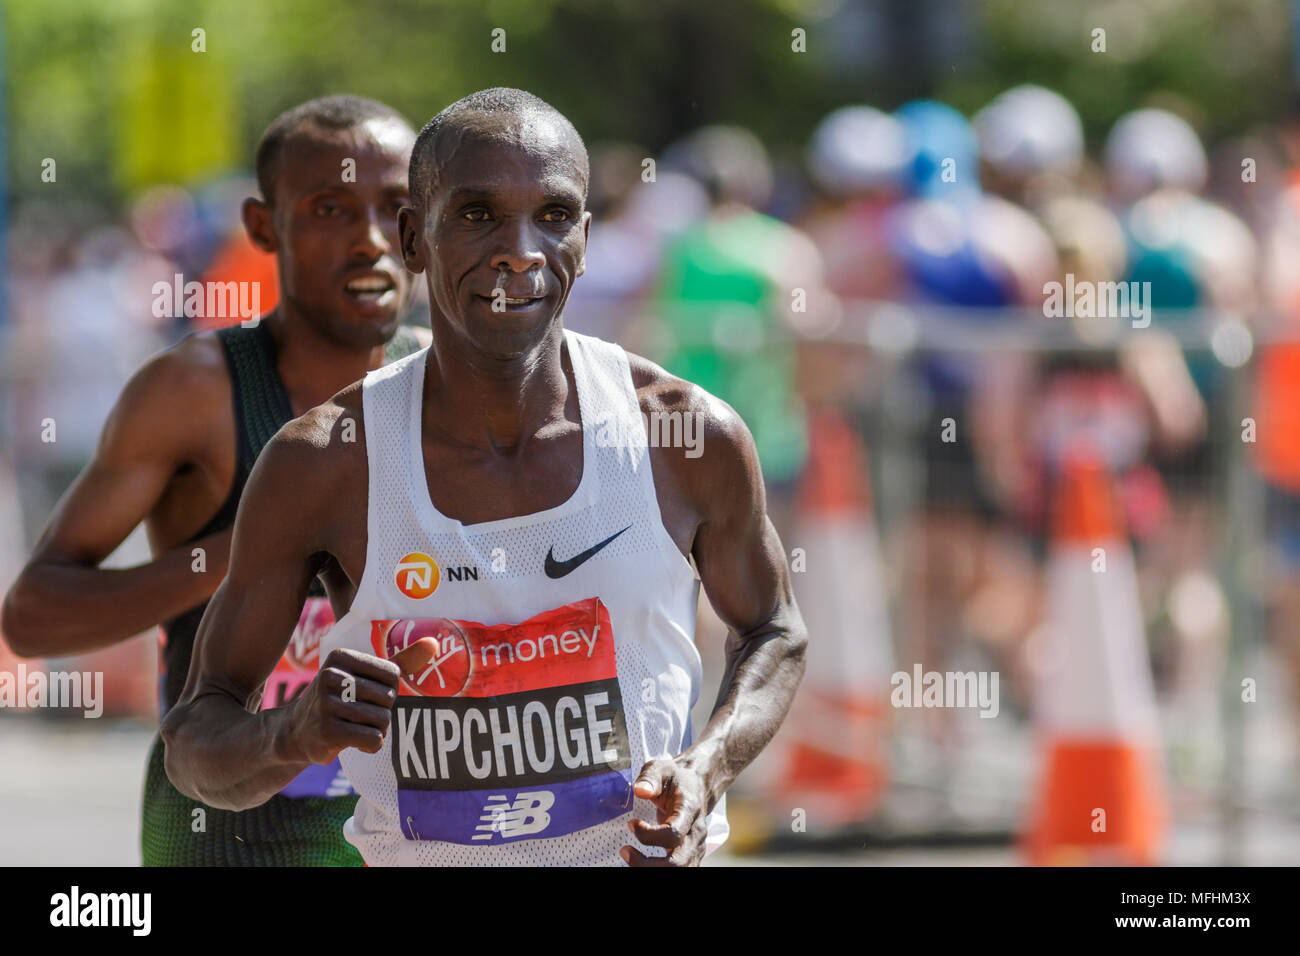 Winner of the Virgin Money London Marathon 2018. Eluid Kipchoge followed by second place finisher. Stock Photo